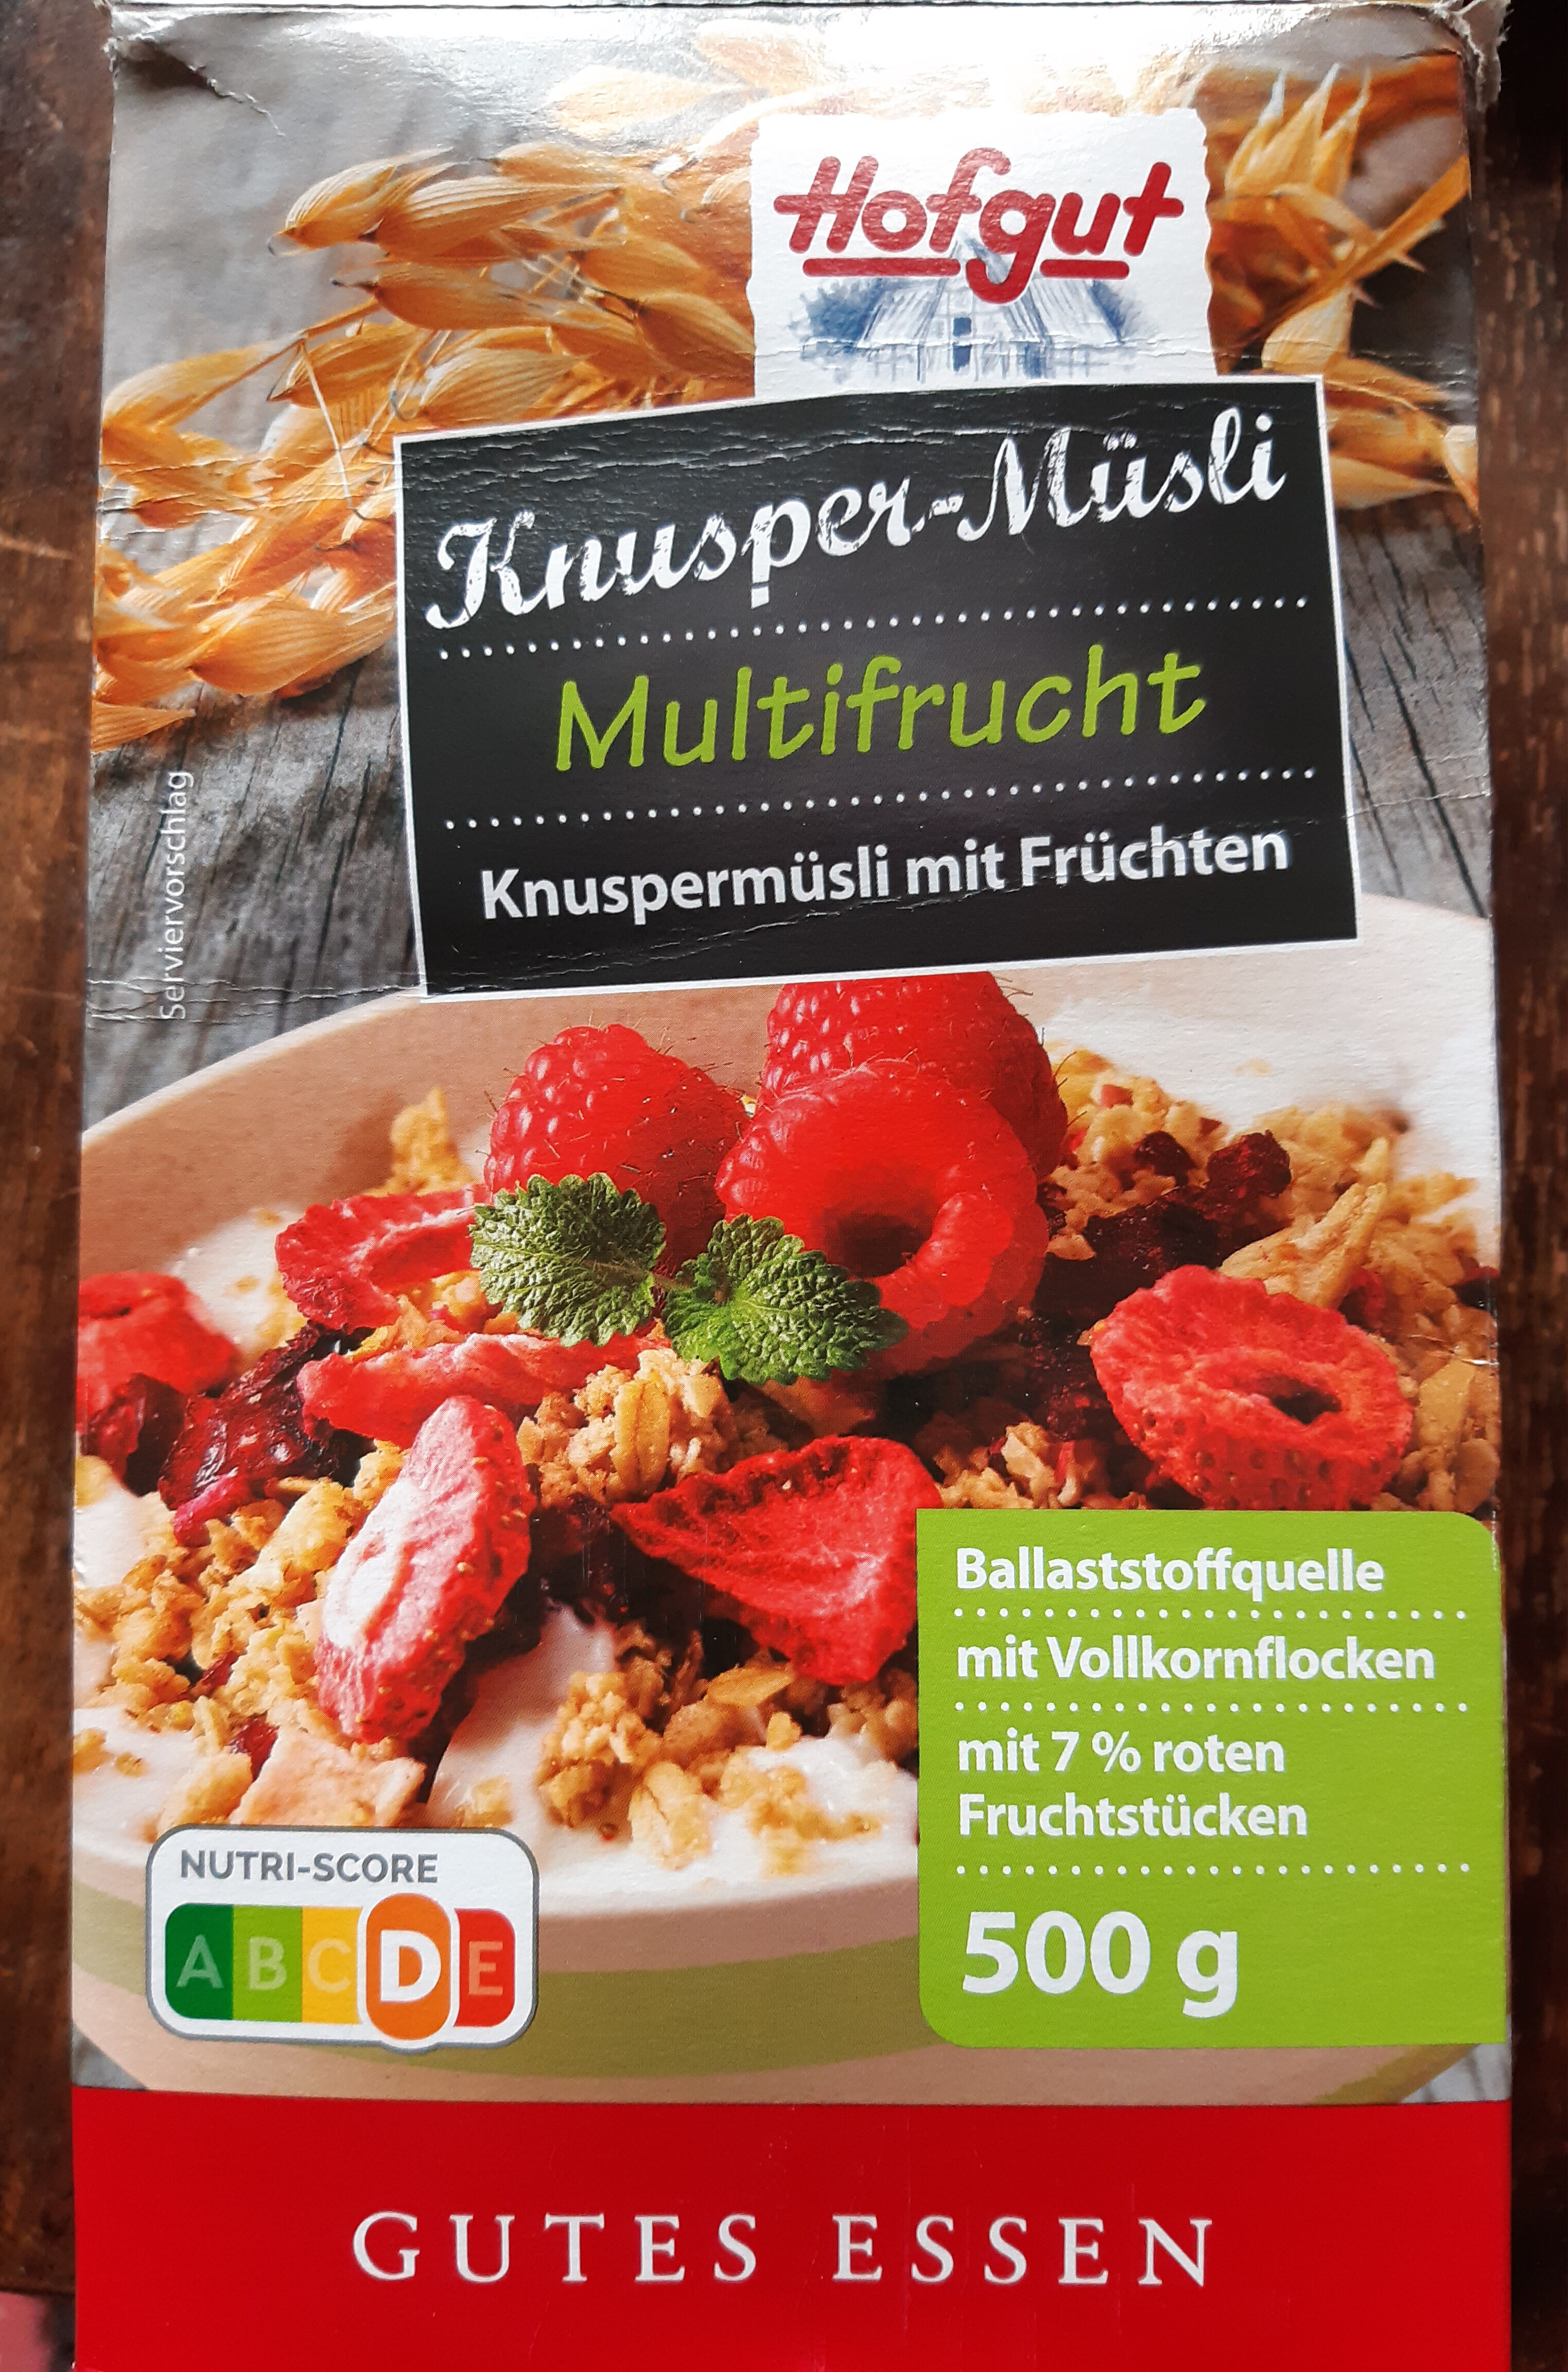 knusper-müsli Multifrucht - Produkt - en